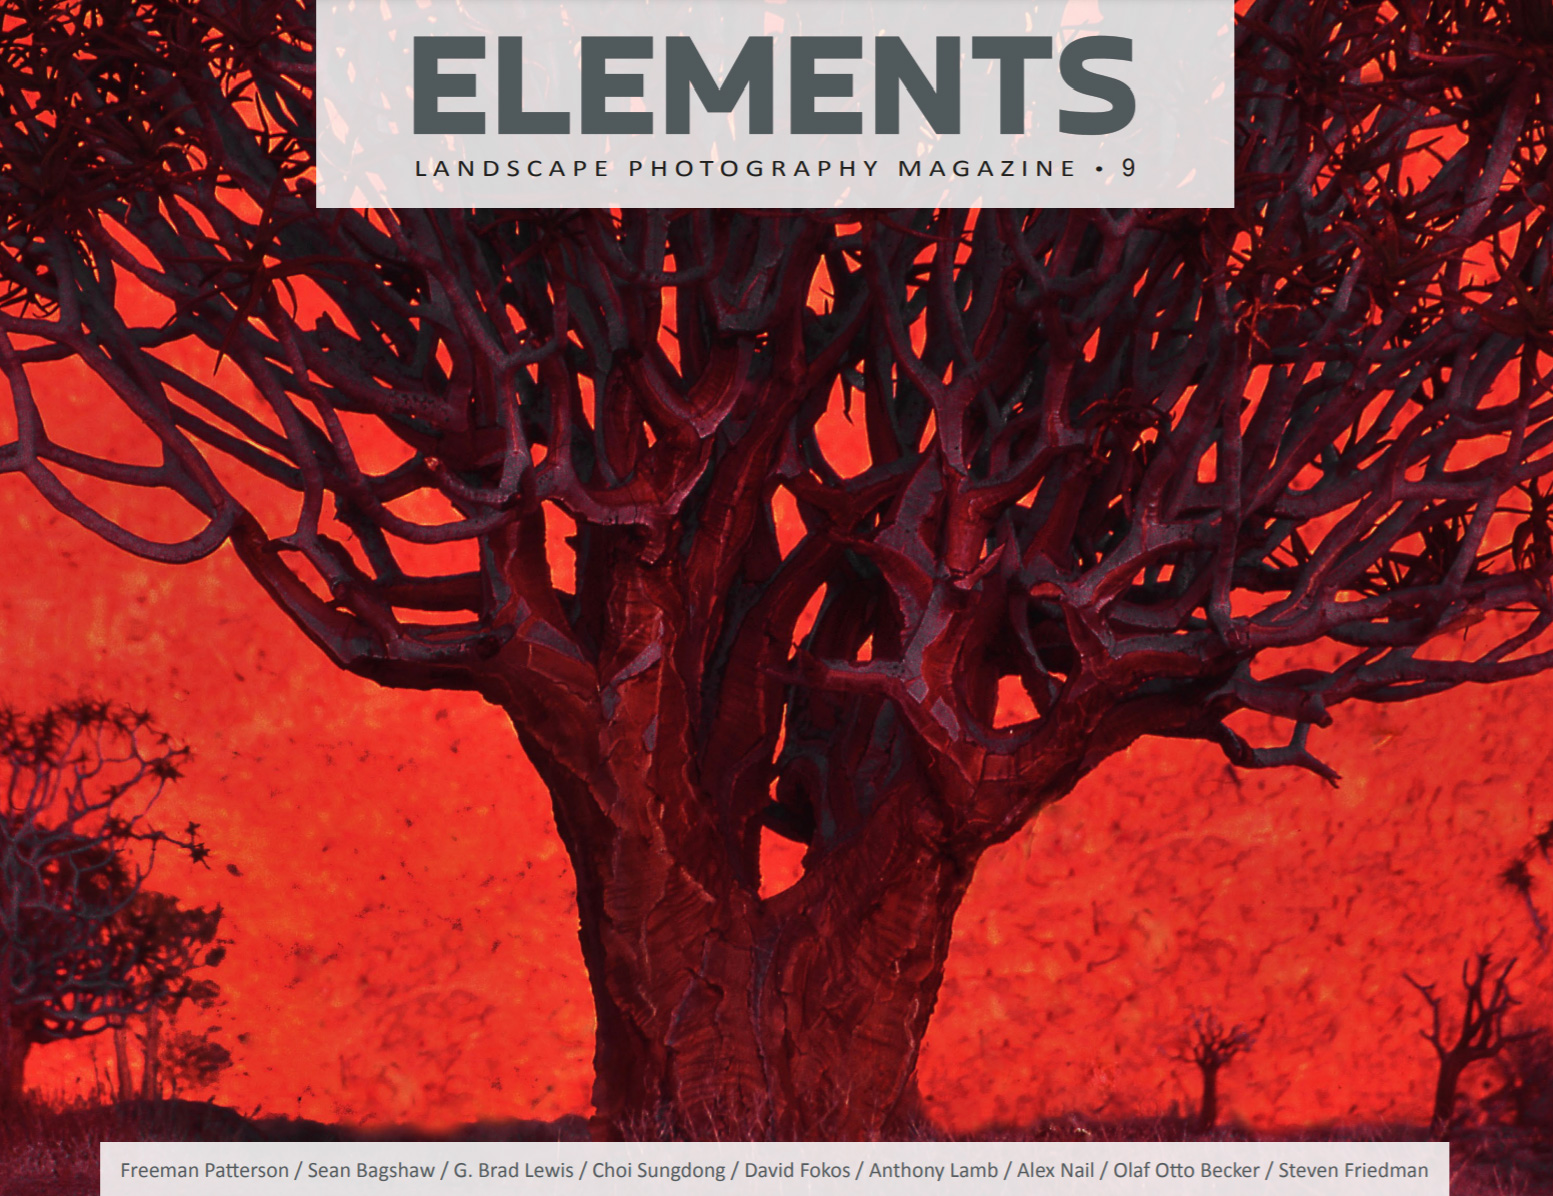 Elements Magazine and Fine Landscape Photography